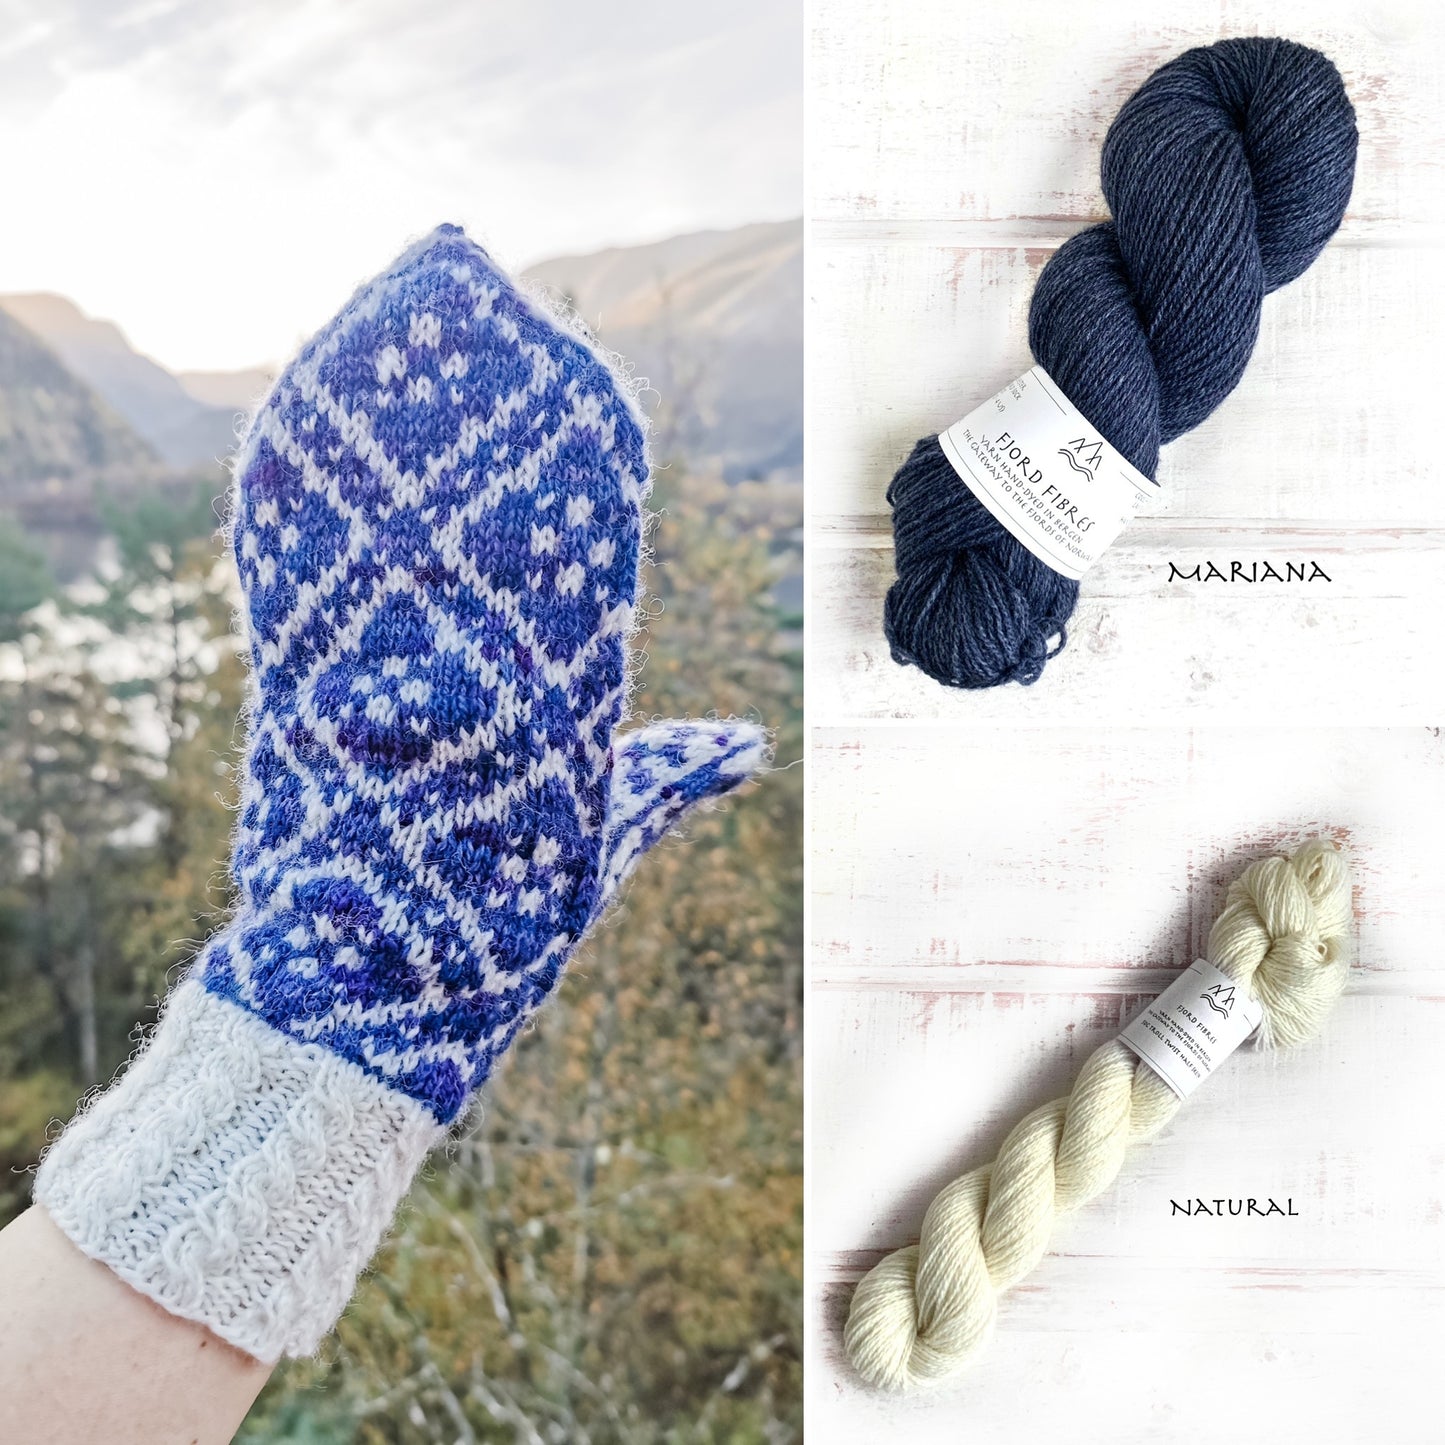 Fleur Élise Mittens Kit - Mariana/Natural - 2 x 50g yarn and Printed Pattern in English/Norwegian